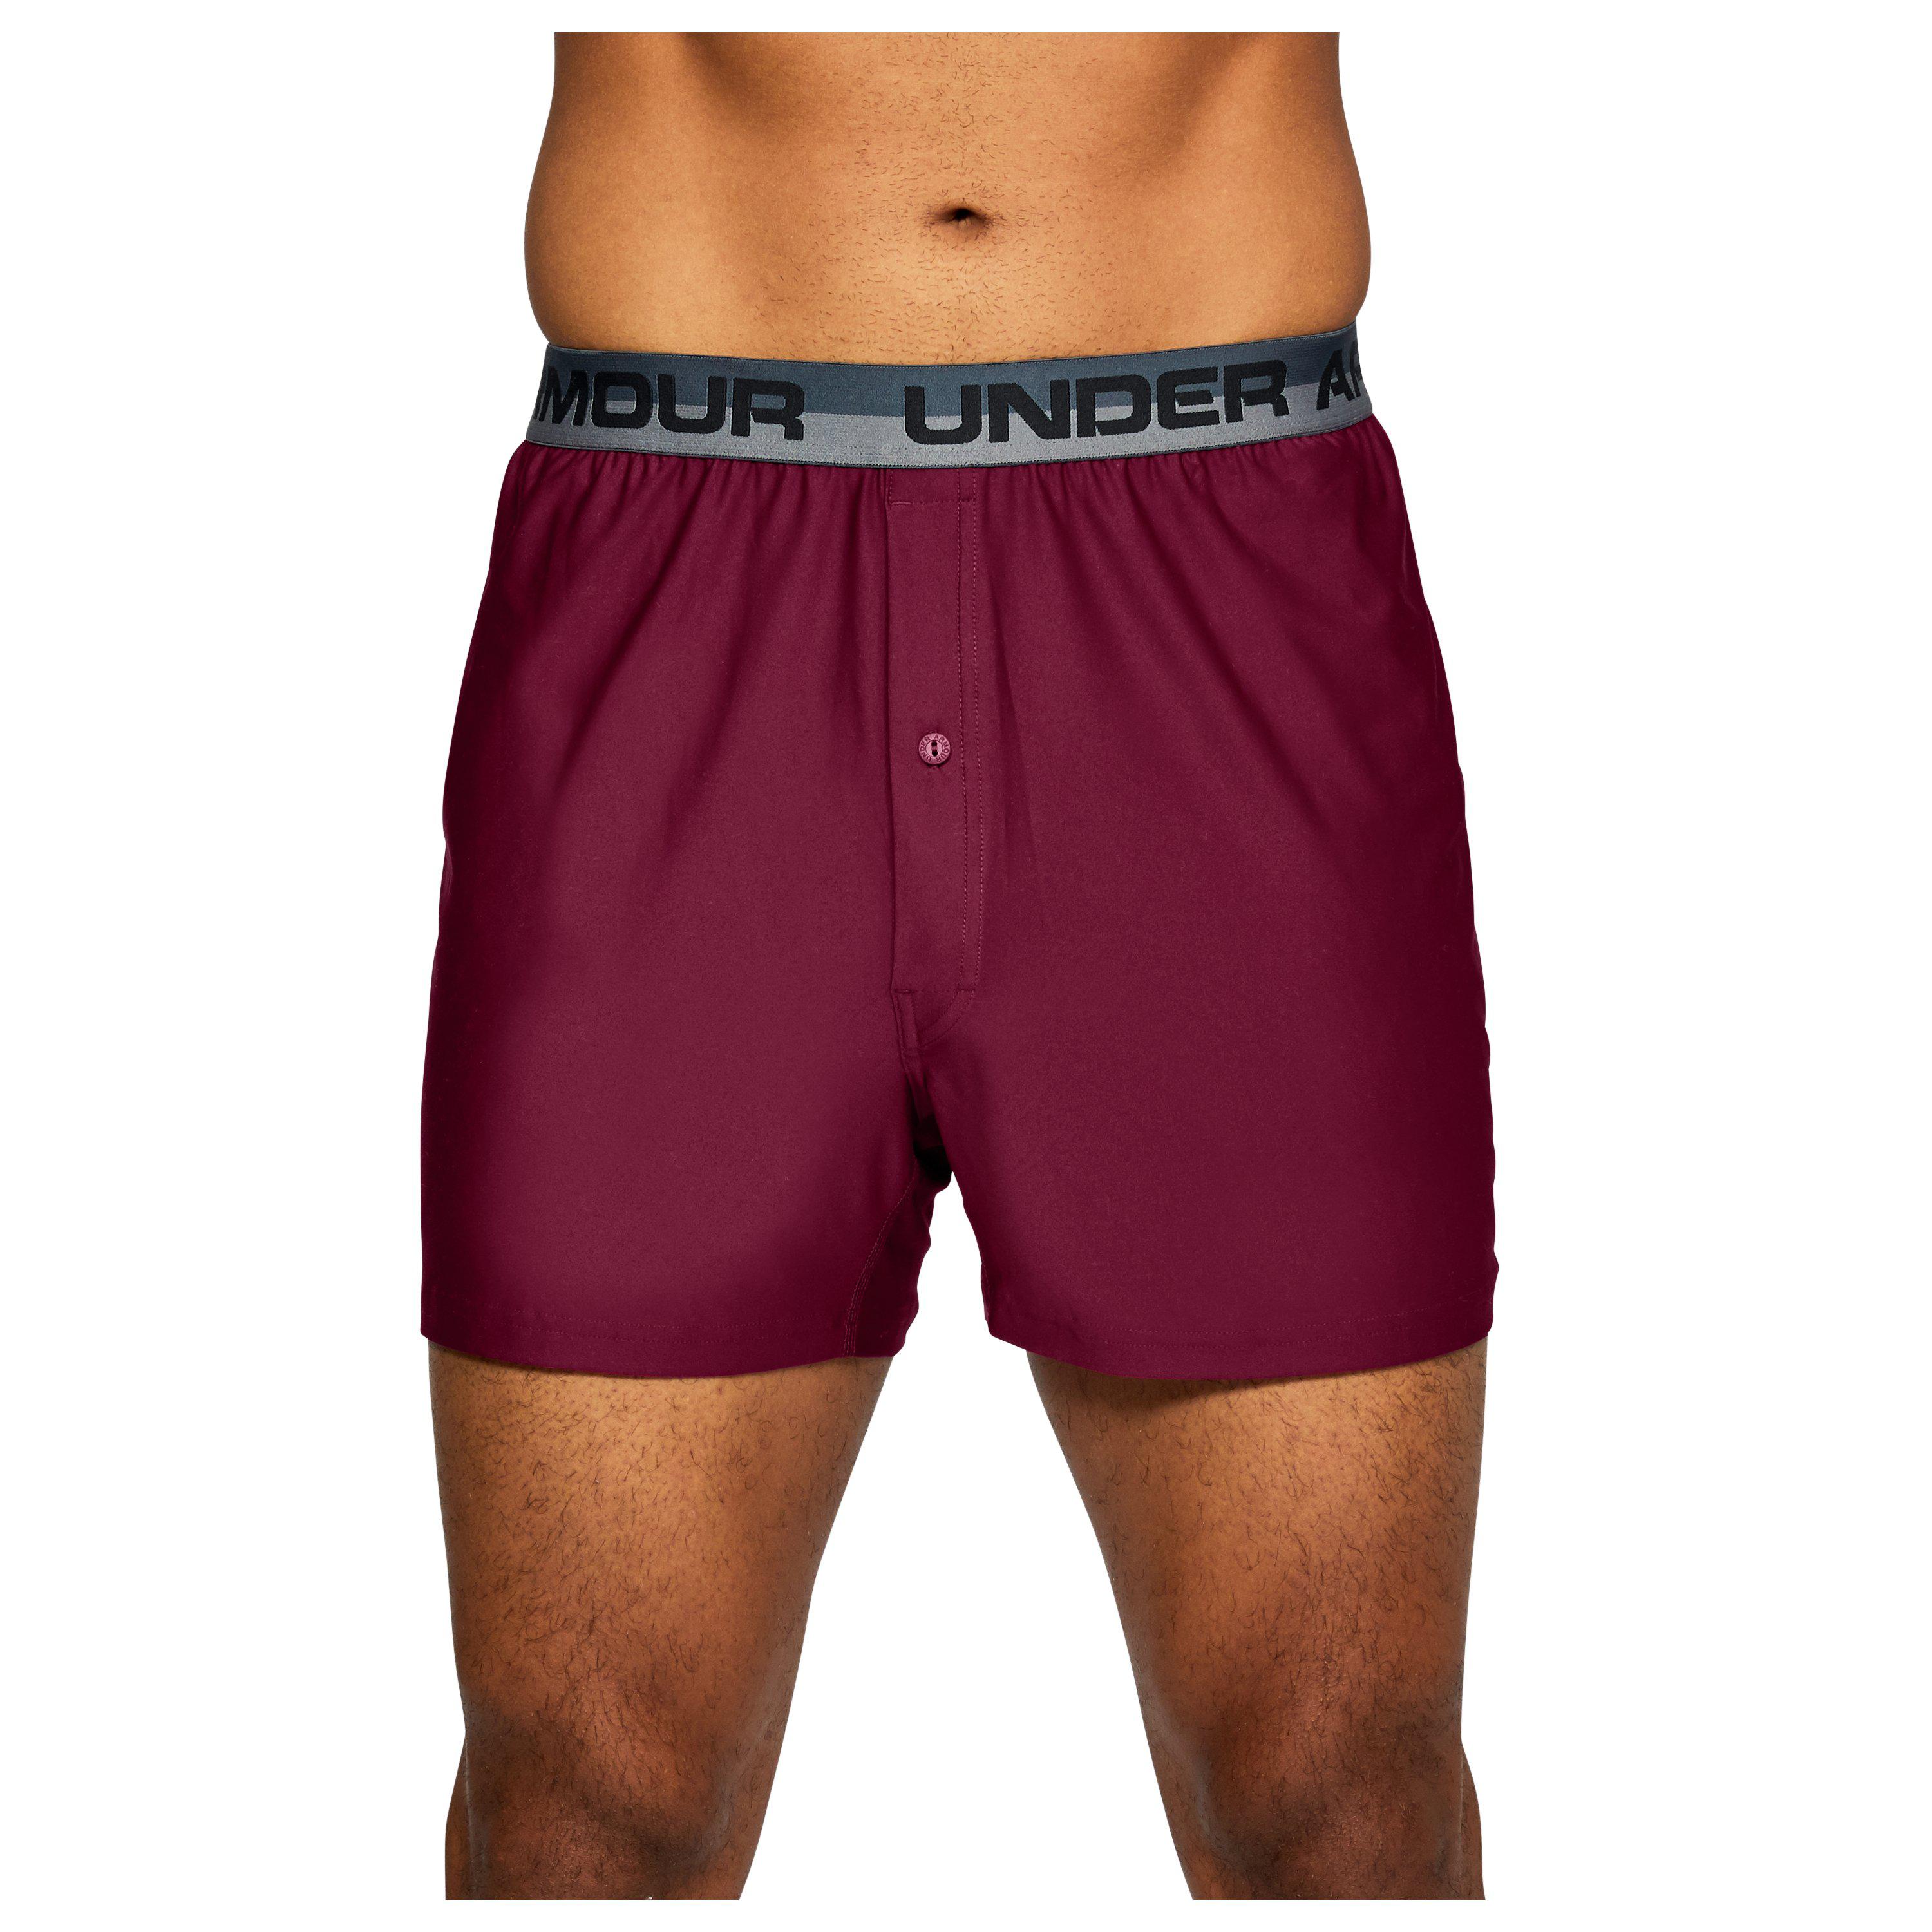 Under Armour Men's Ua Original Series Boxer Shorts for Men Lyst